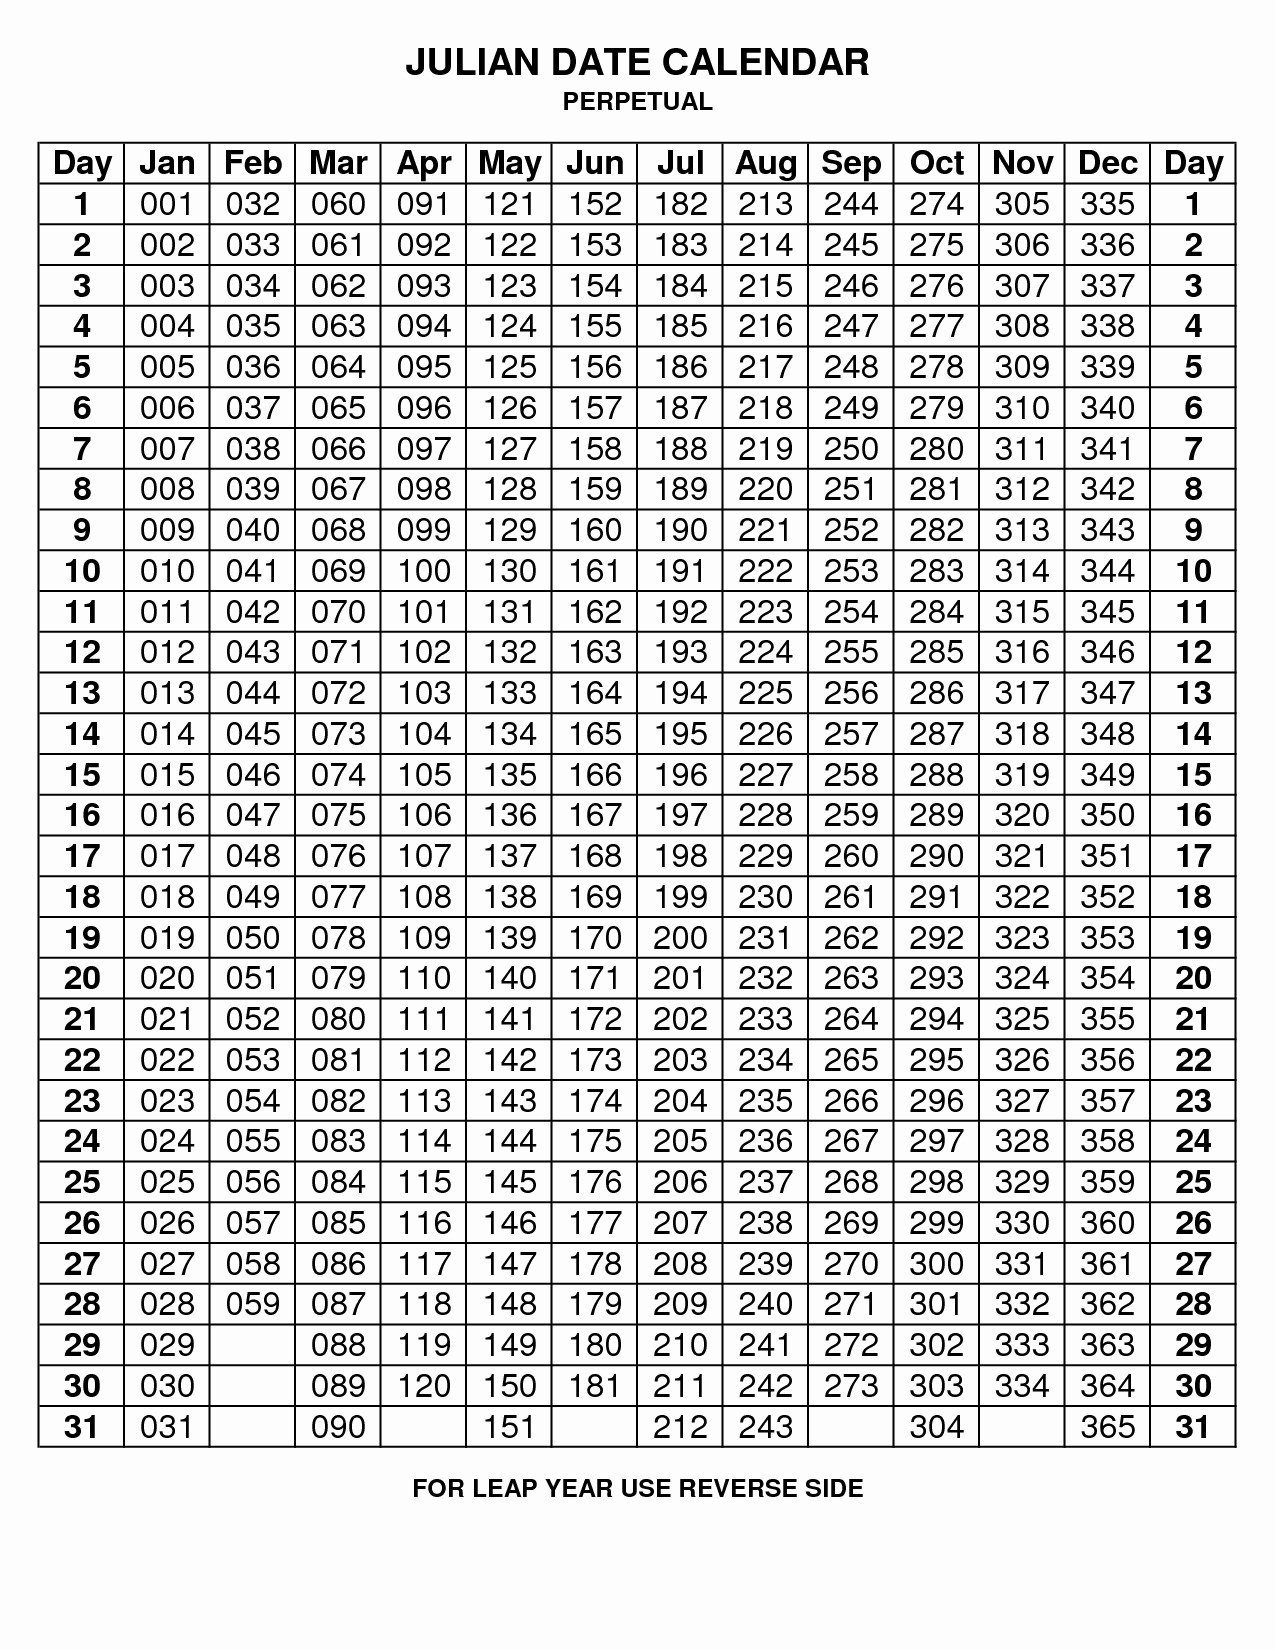 Depo Provera Perpetual Calendar To Print - Calendar Depo Provera Injection Calendar 2021